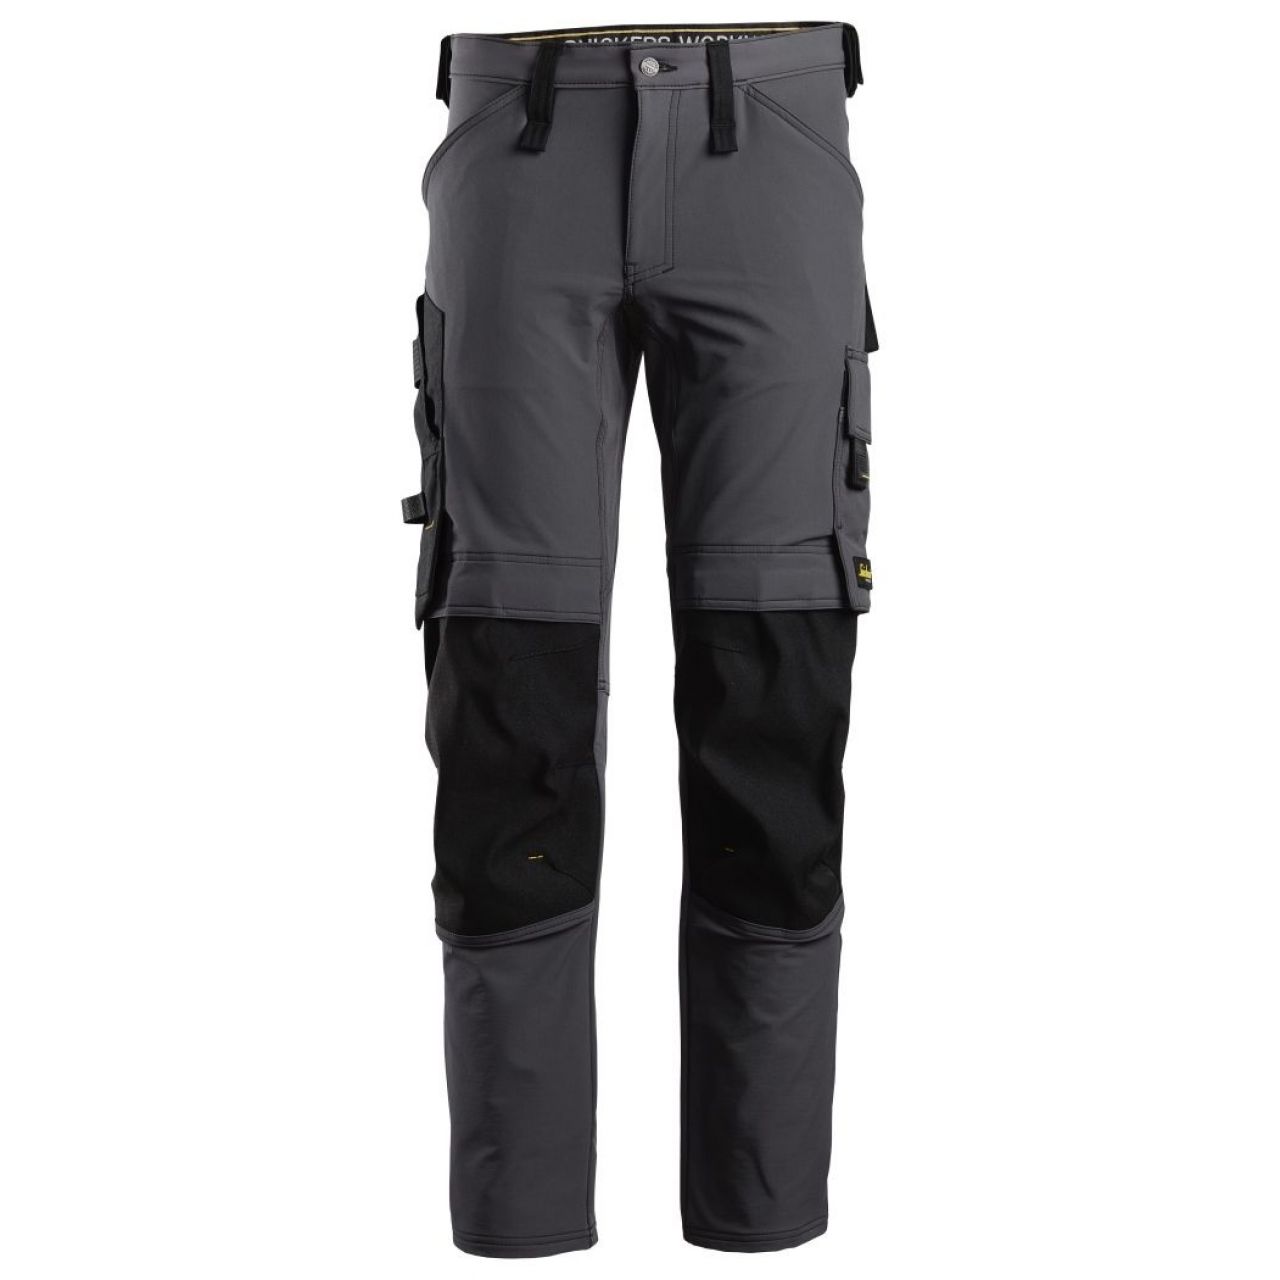 Pantalon elastico AllroundWork gris acero-negro talla 104